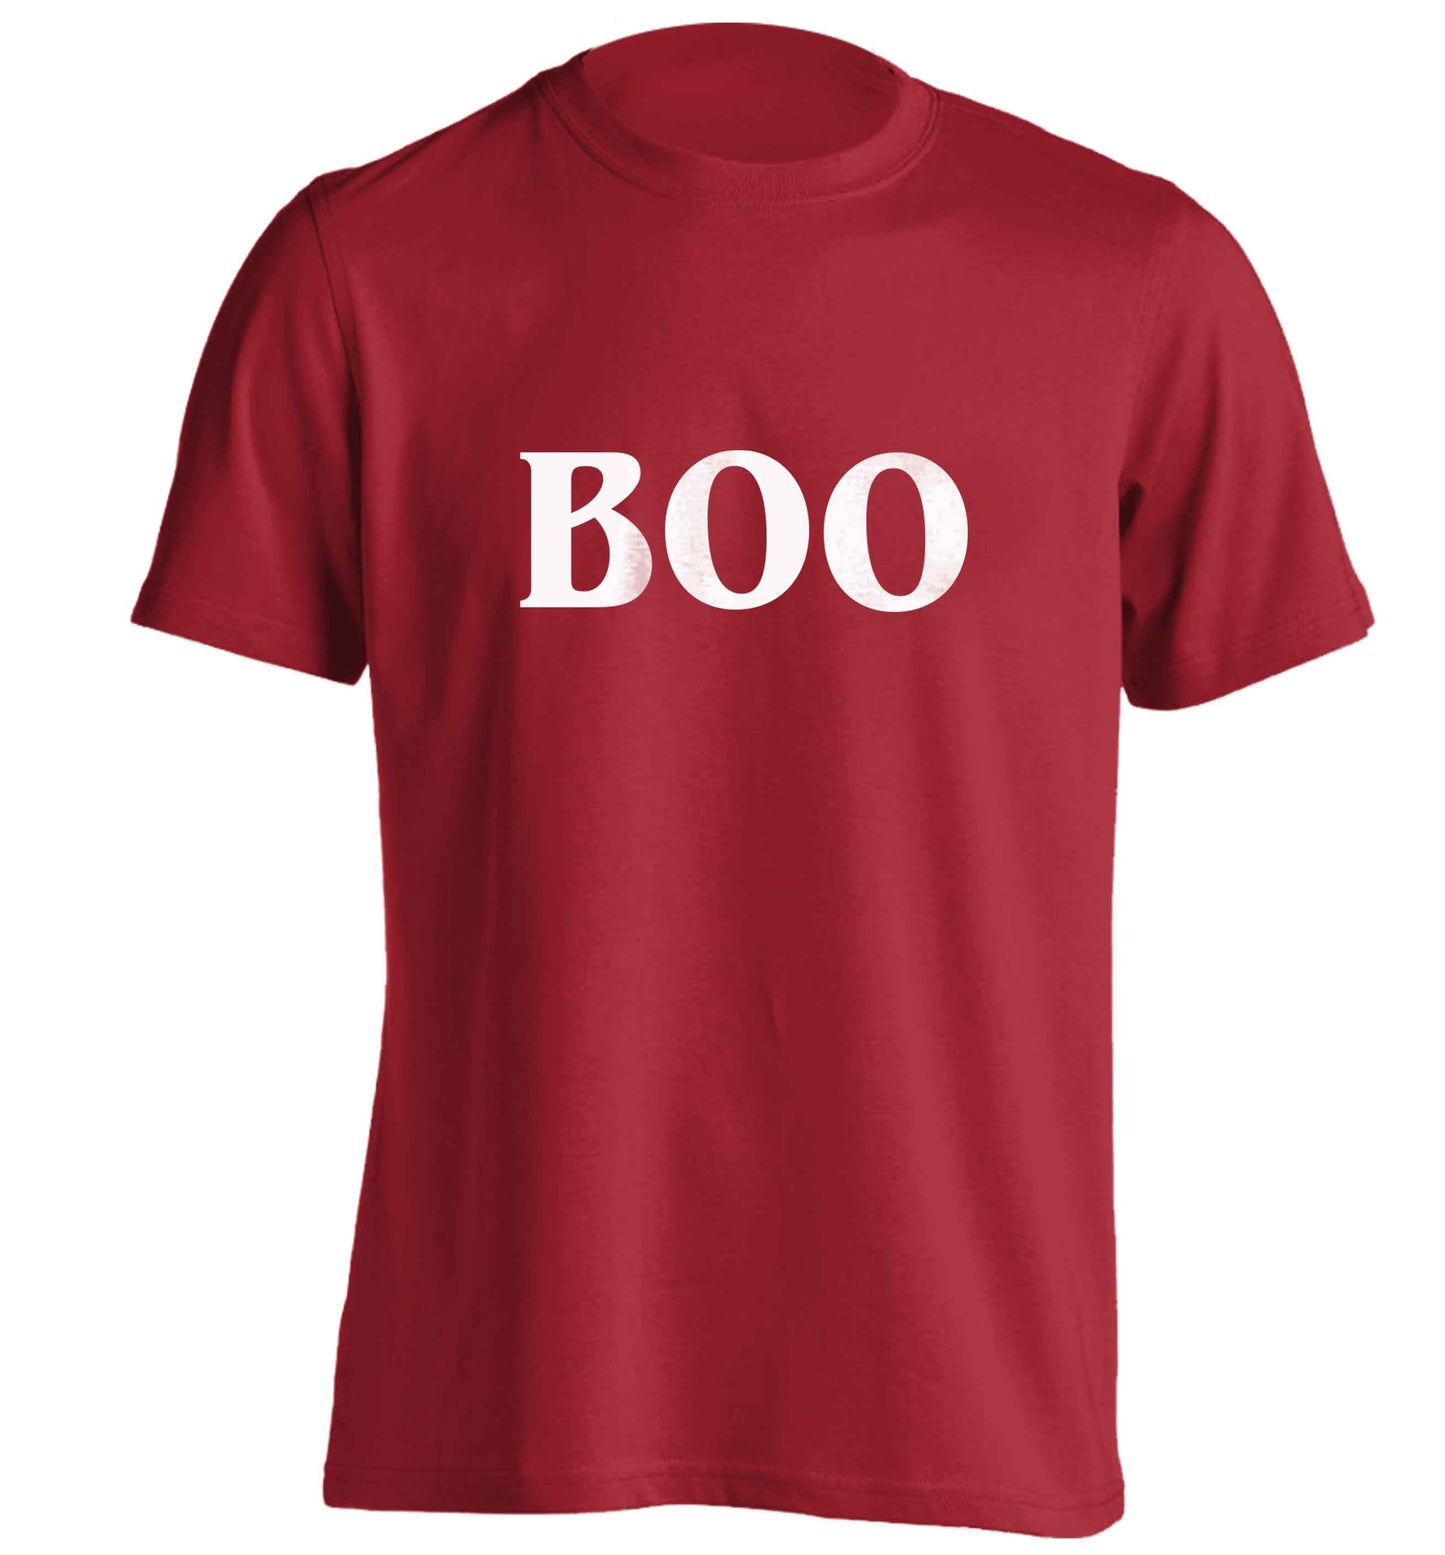 Boo adults unisex red Tshirt 2XL